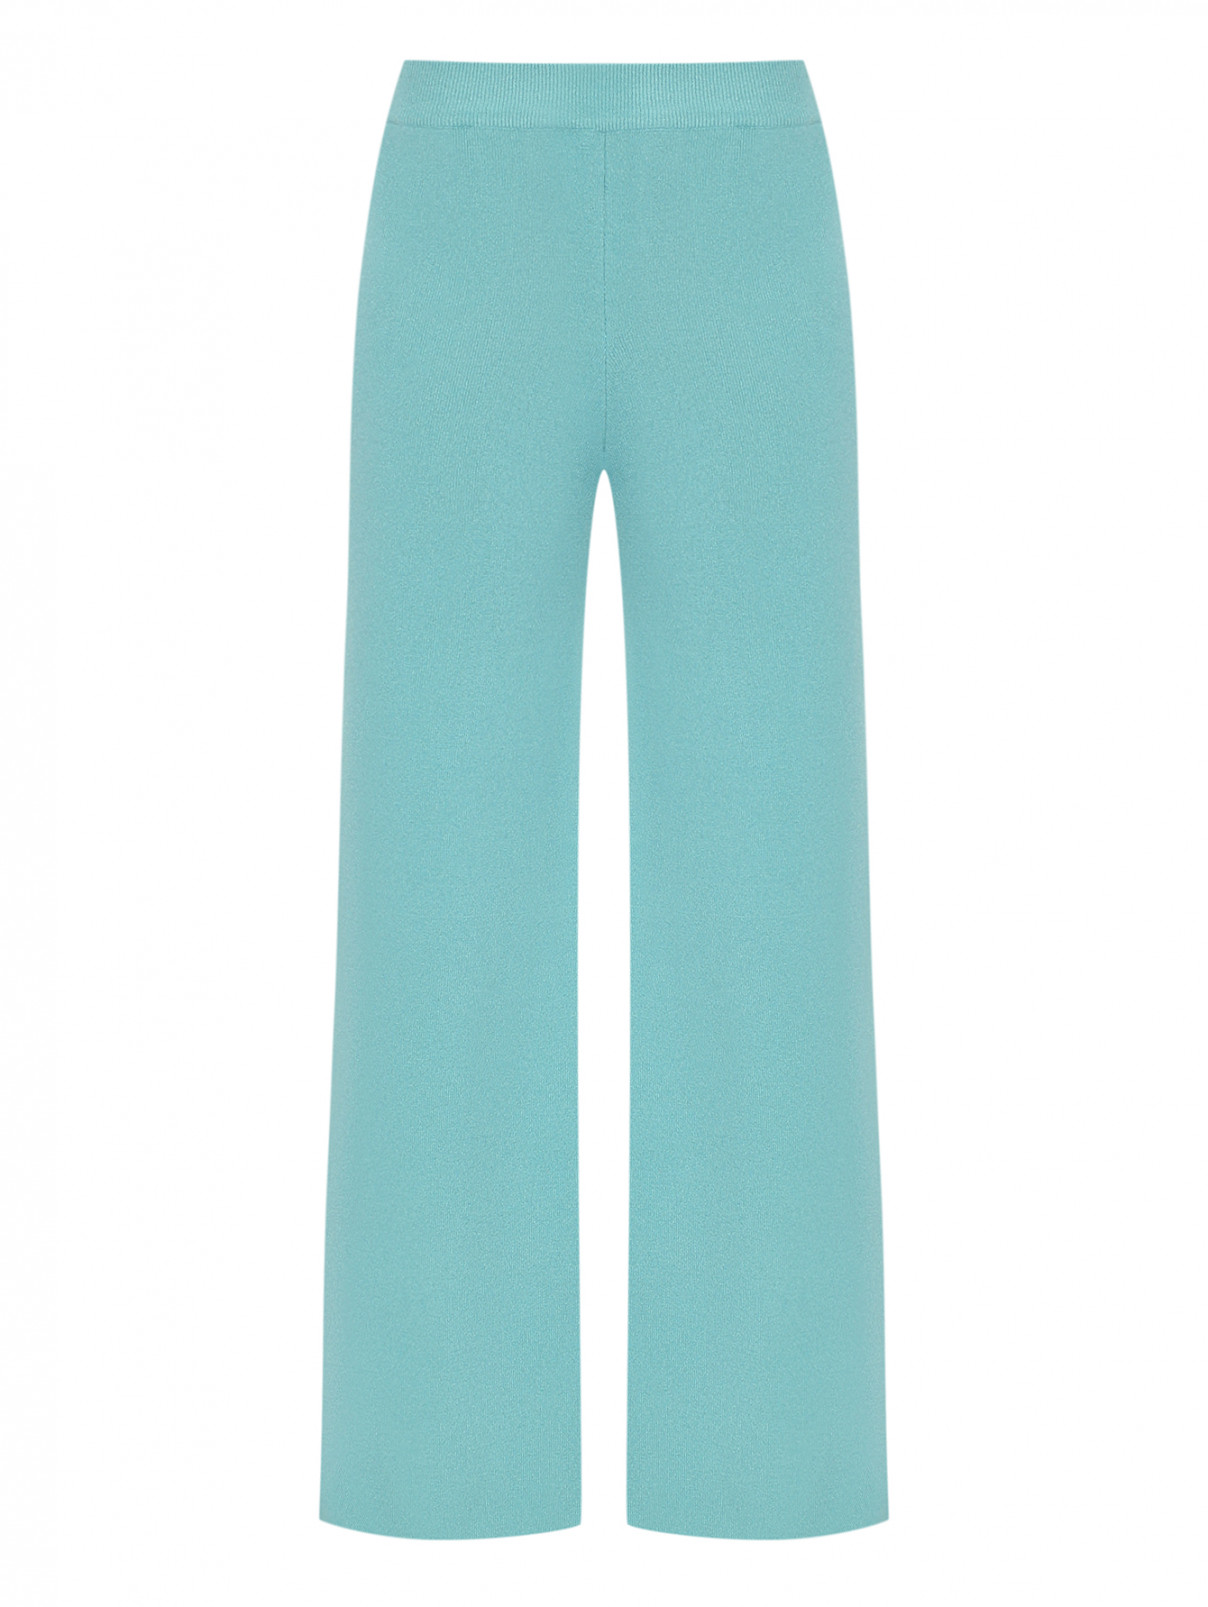 Широкие брюки из трикотажа на резинке Shade  –  Общий вид  – Цвет:  Синий